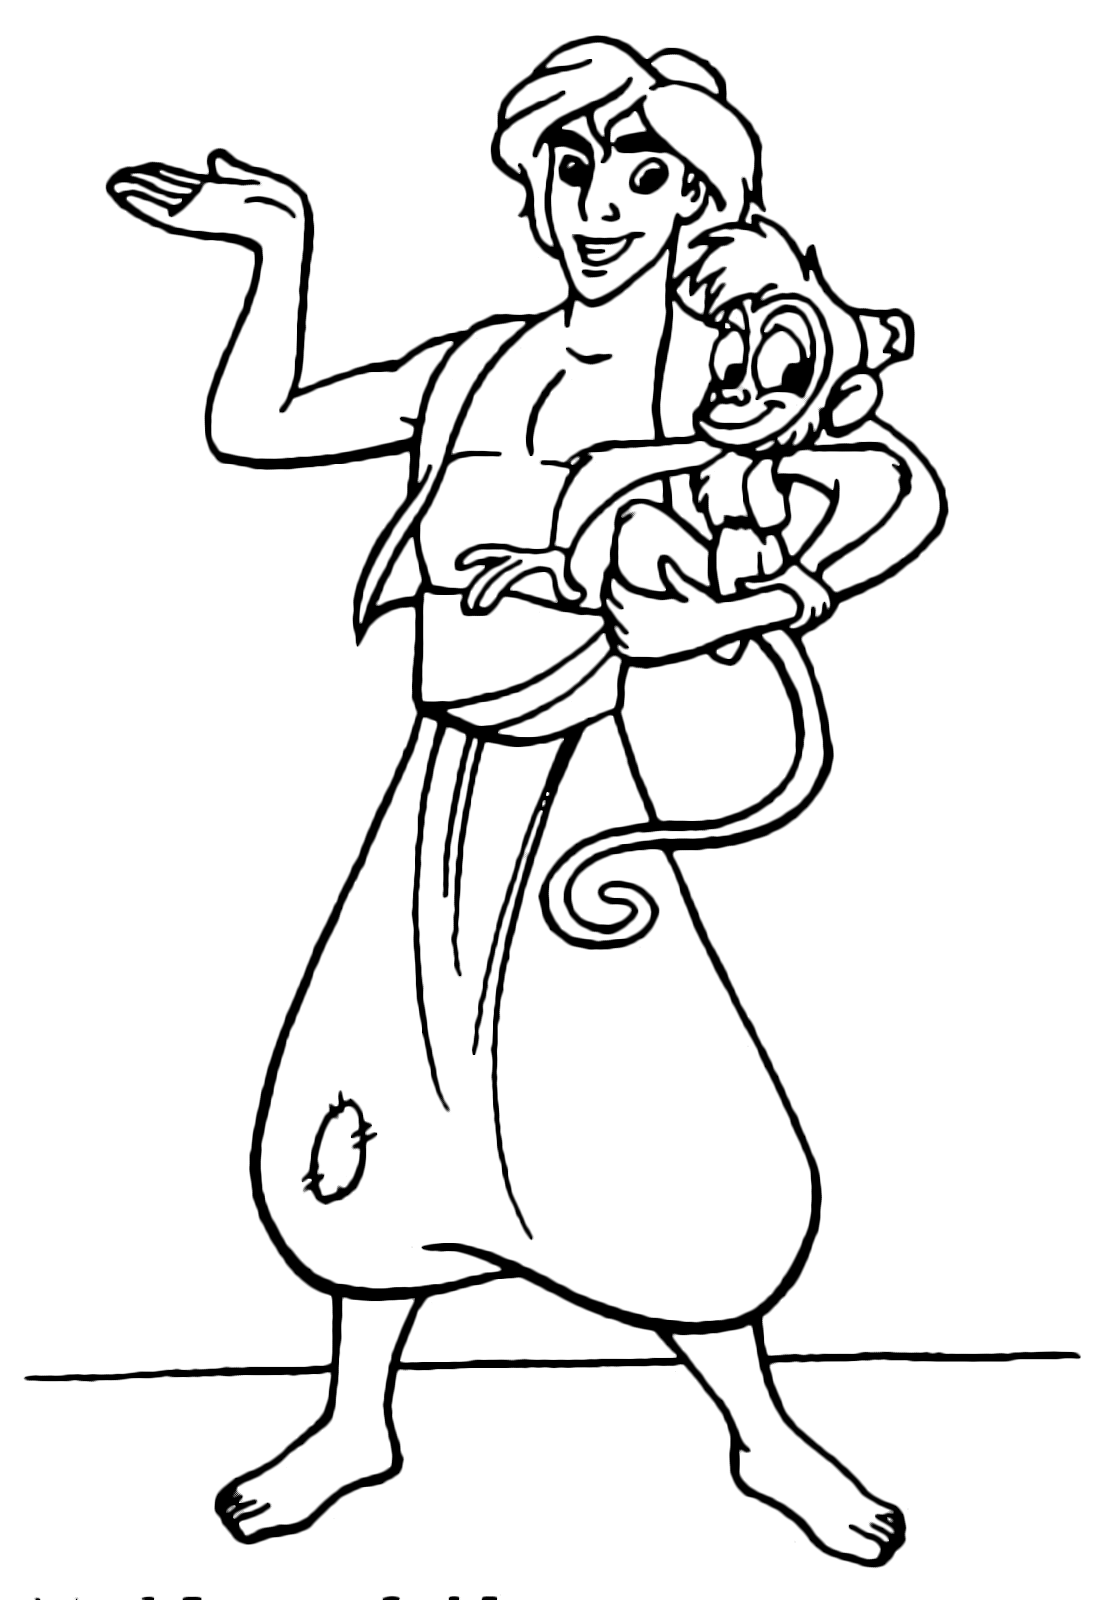 Aladdin - Aladdin holding the little monkey Abu